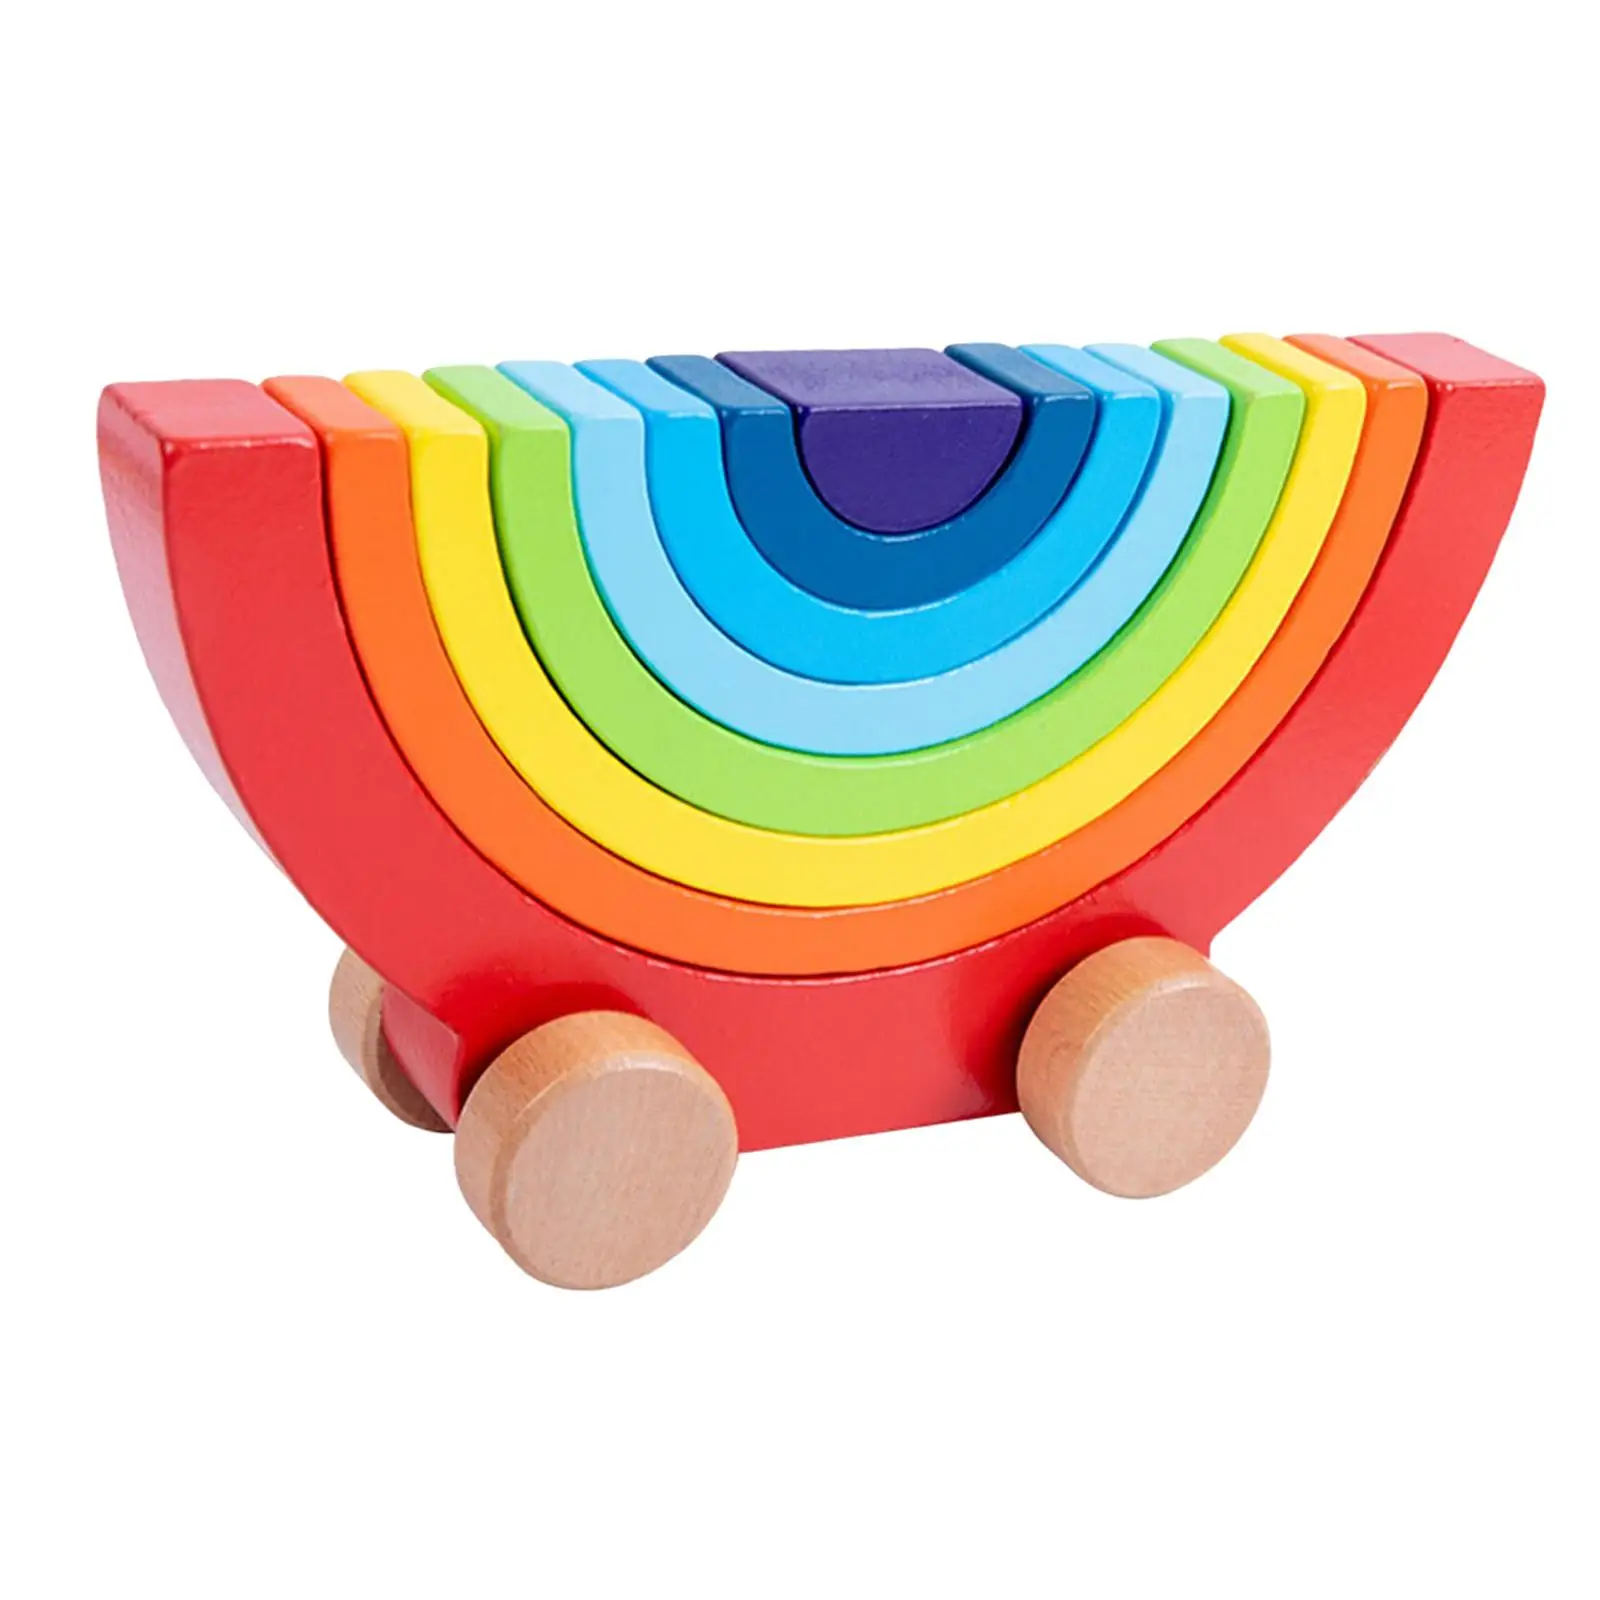 Wooden Building Blocks Car Toy Stackable Development Creative Decor for Kids